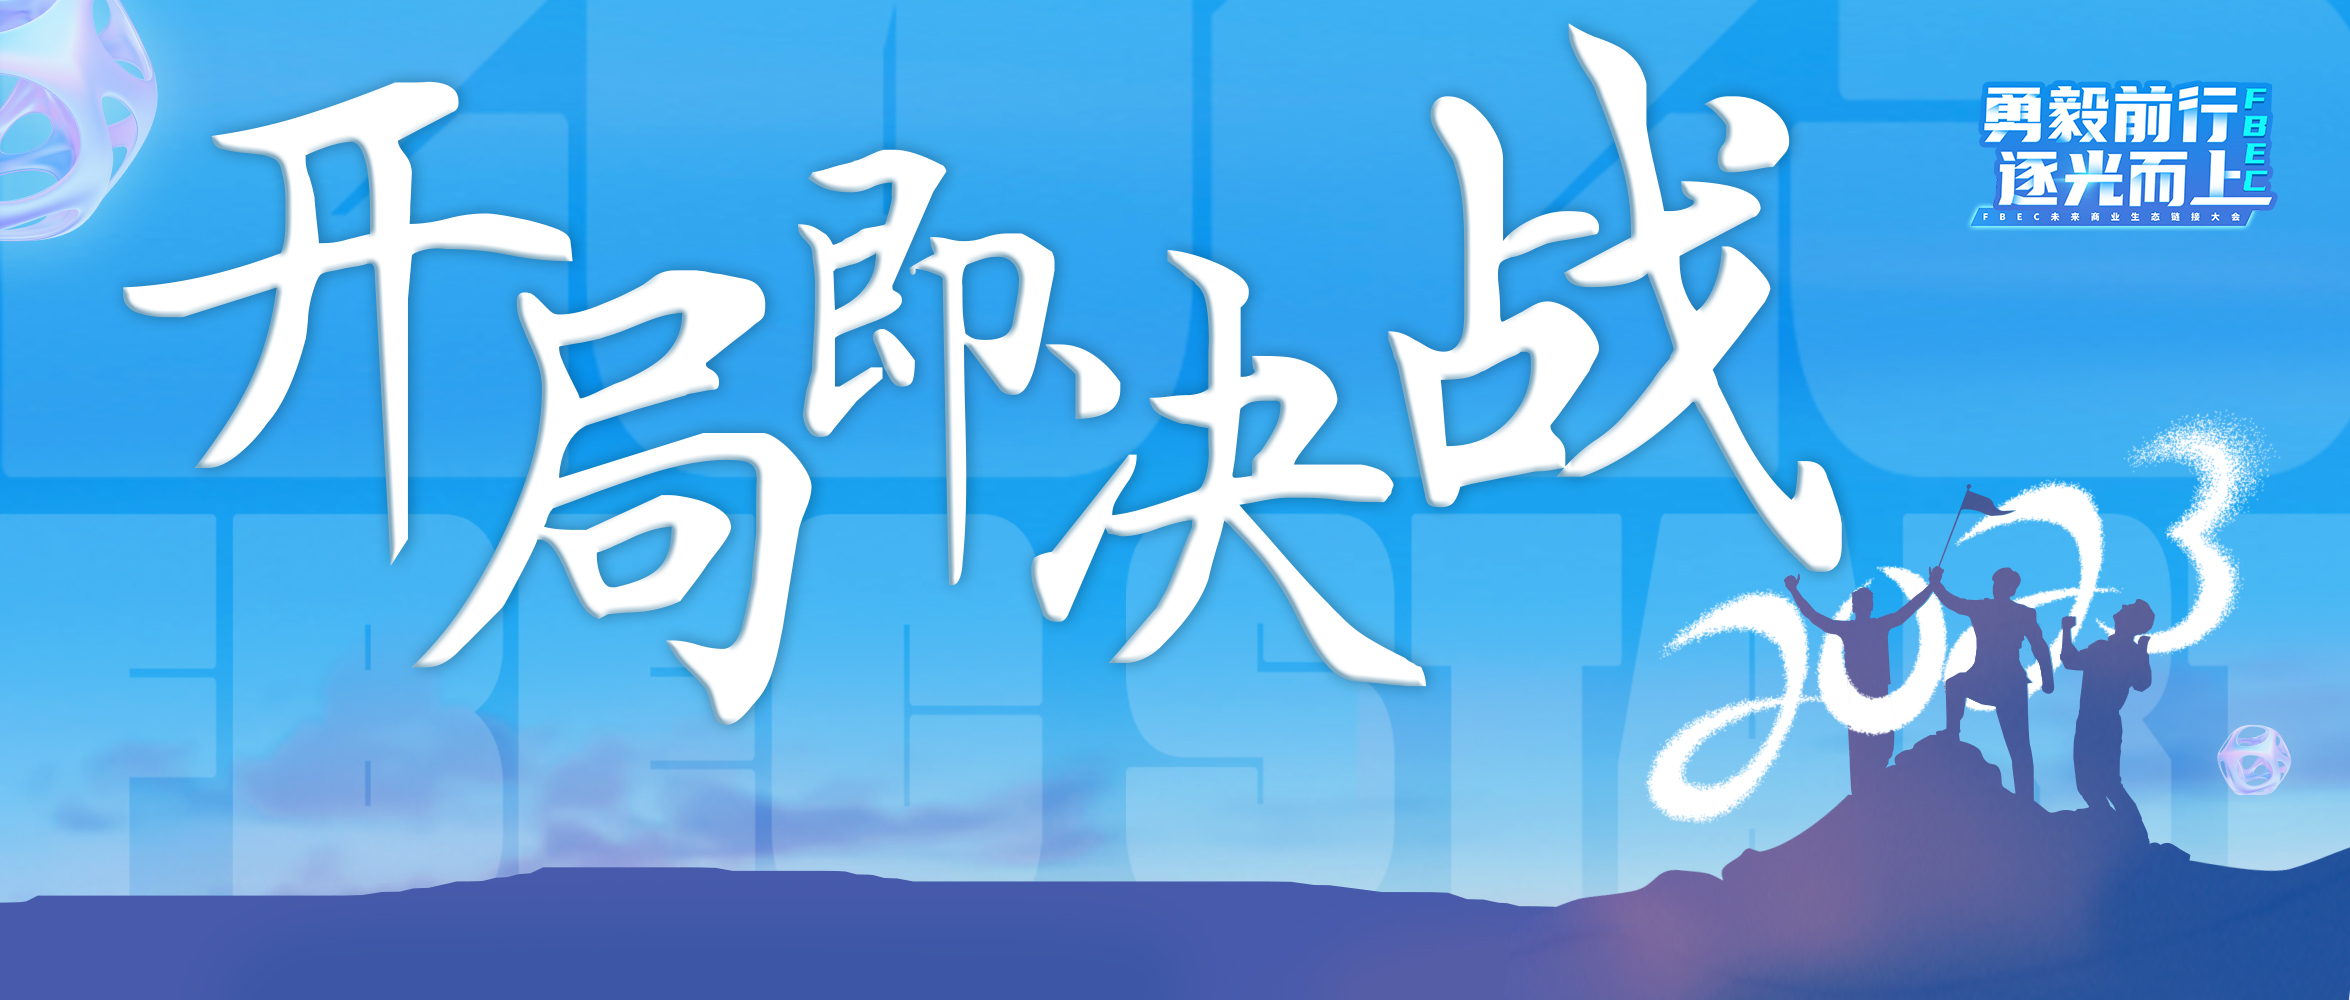 FBEC 2月24日聚锦鹏城，行业重要影响力盛会开年率先登场！